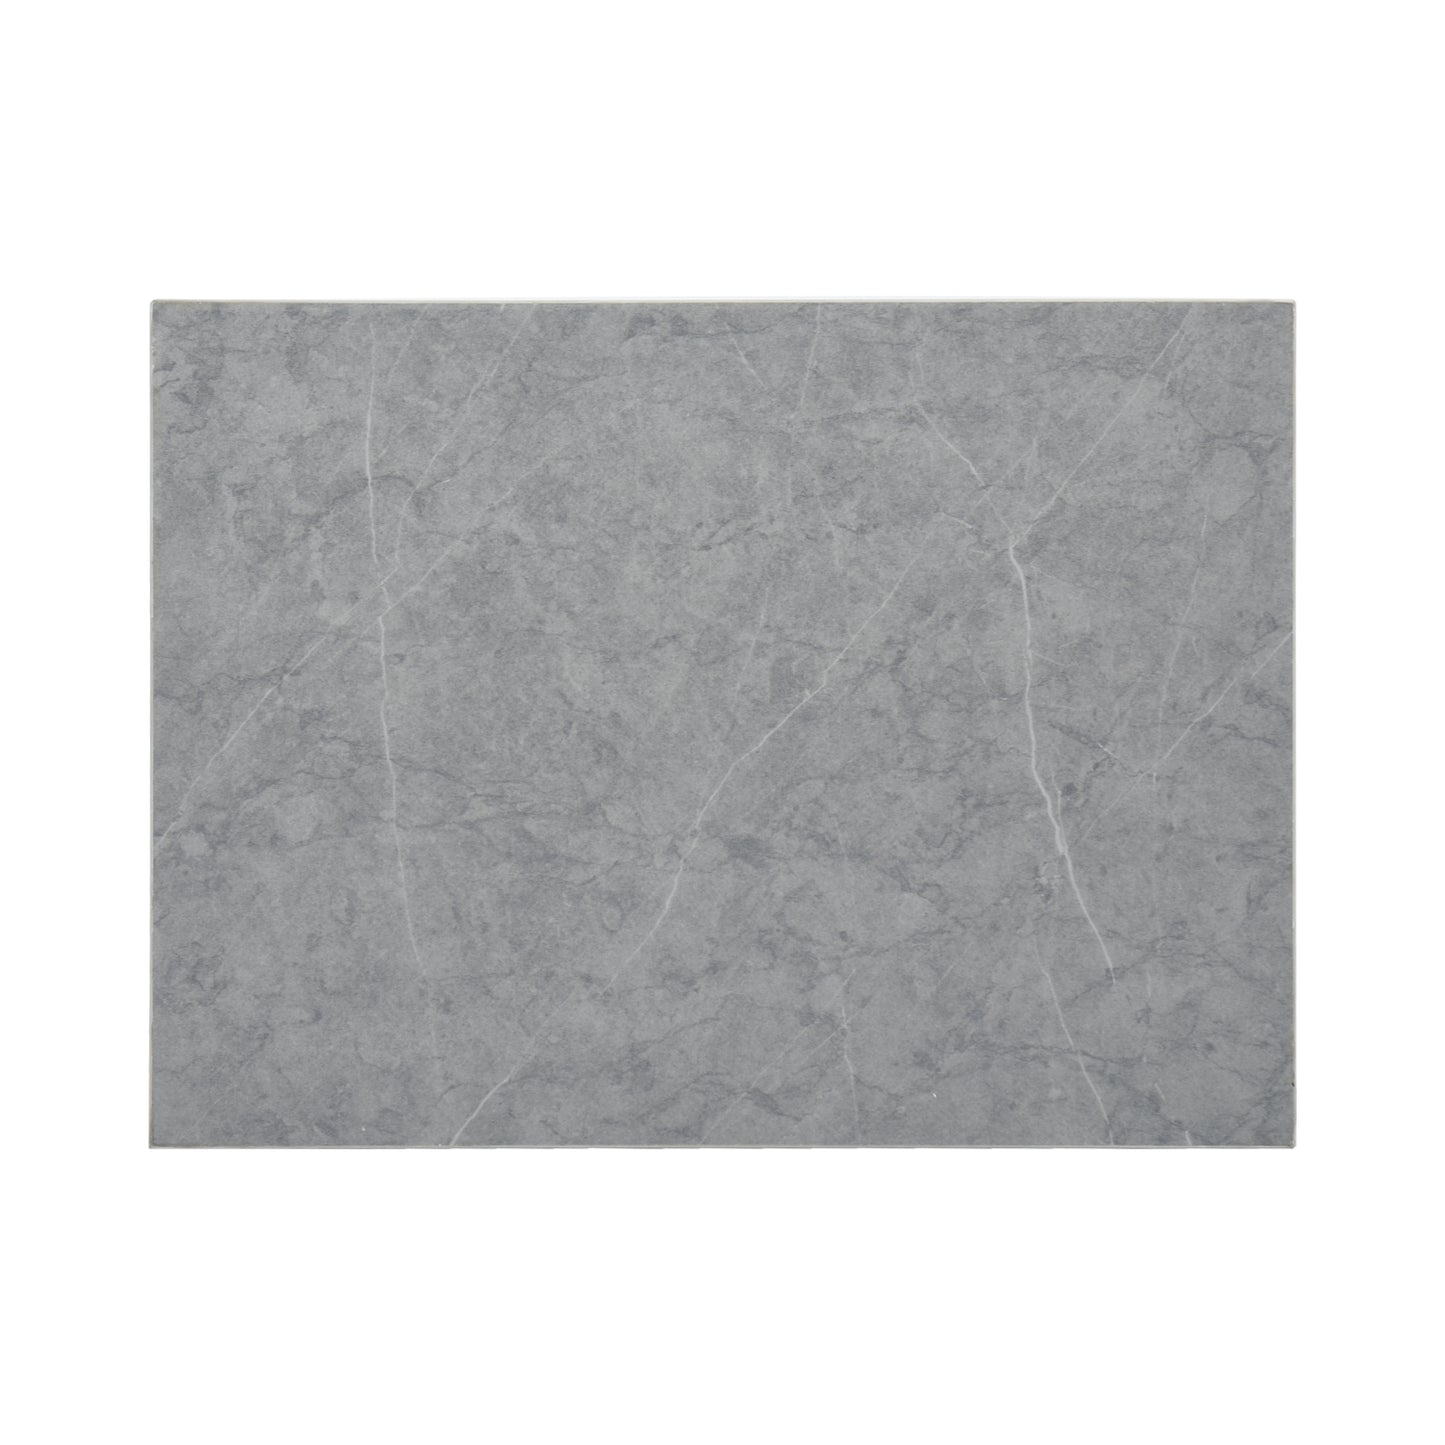 FAIRMAN 4-Person Retro Bar Set - Gray Marble Pattern